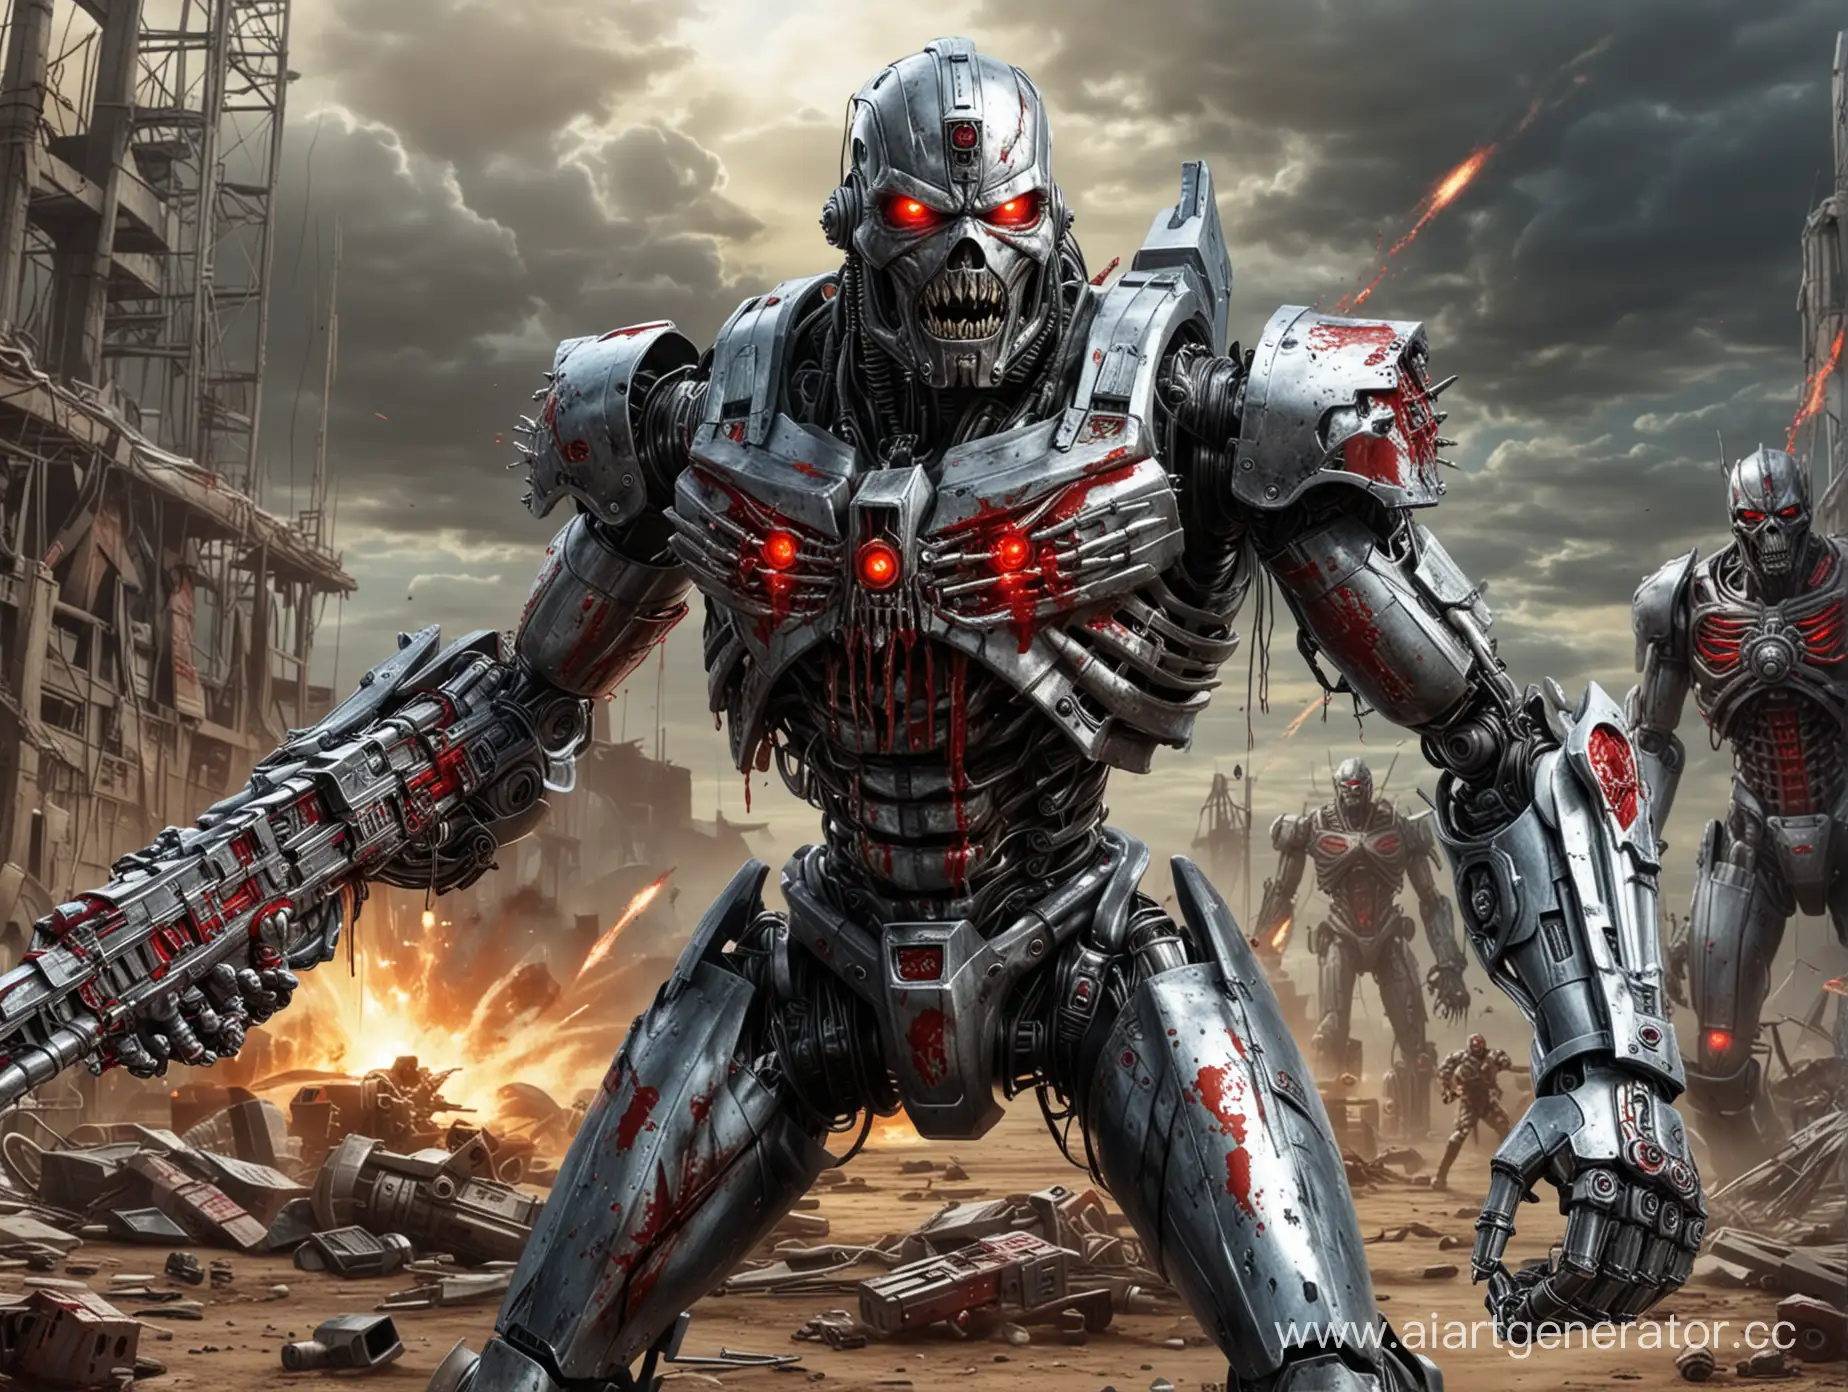 Futuristic-Battle-Scene-Iron-Maiden-Robot-with-Chrome-Laser-Weapon